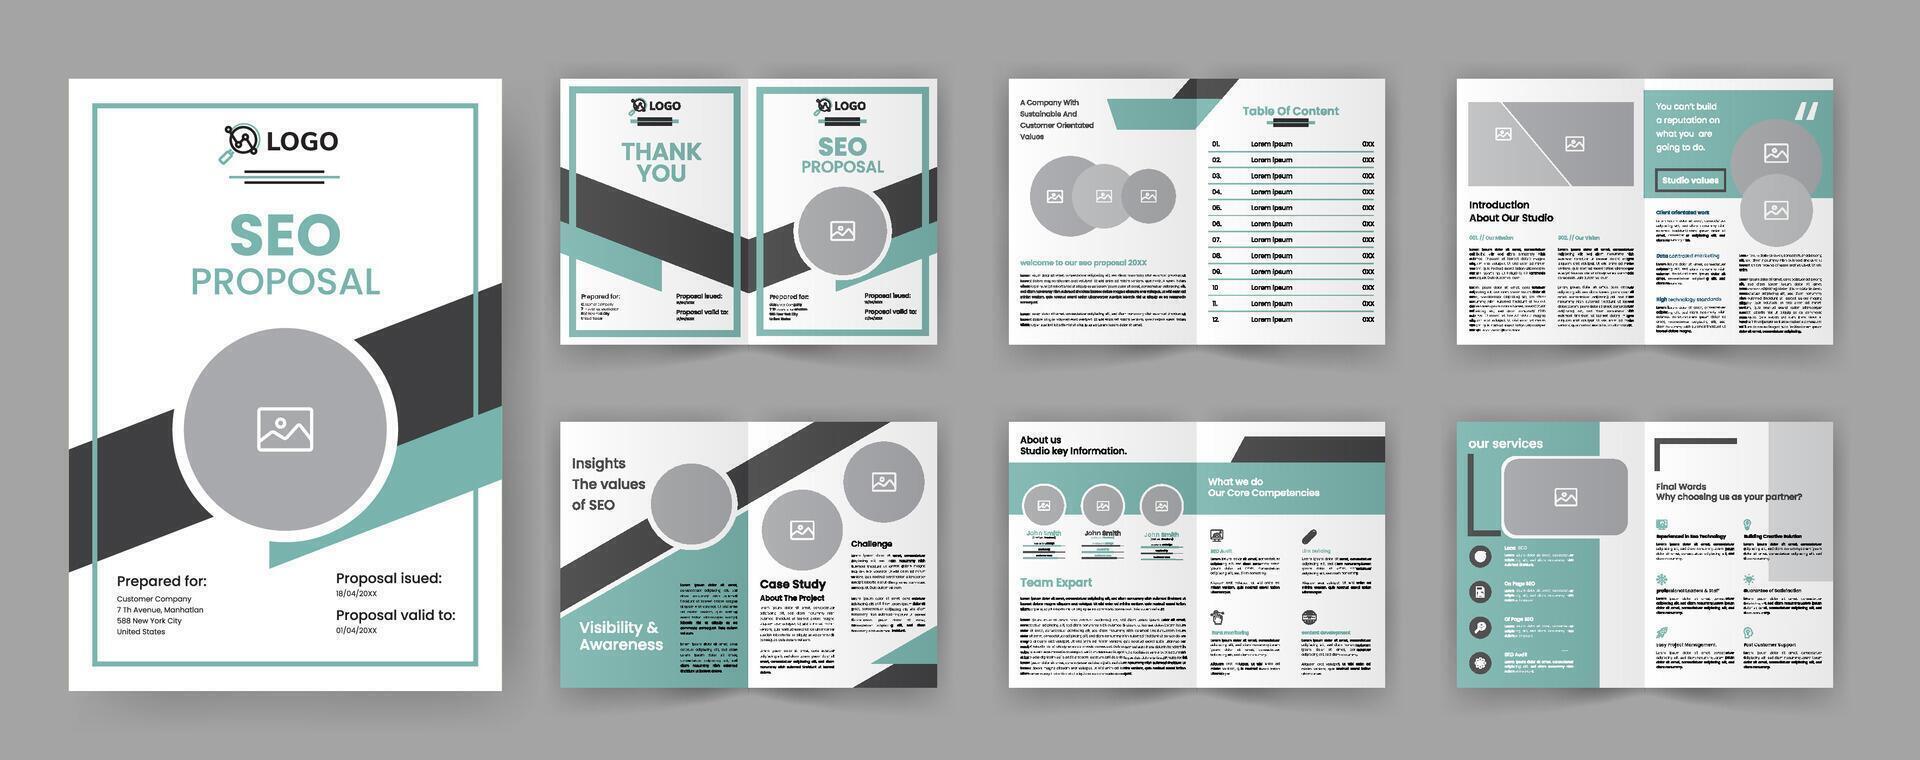 SEO Marketing Proposal Brochure Template for Web Design Business vector